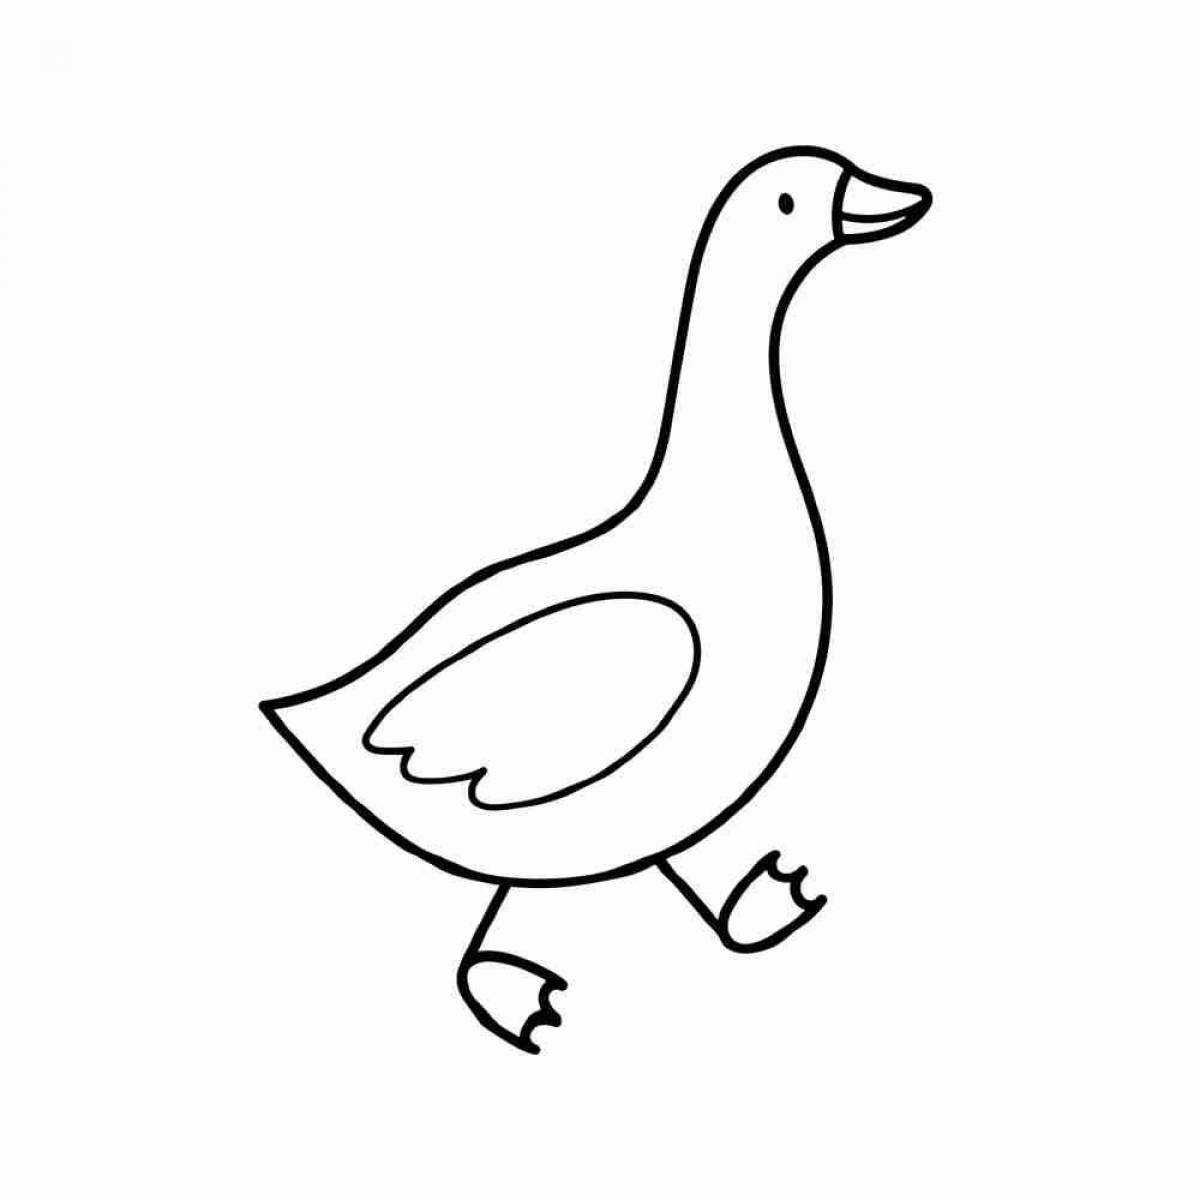 Goose hug live coloring page